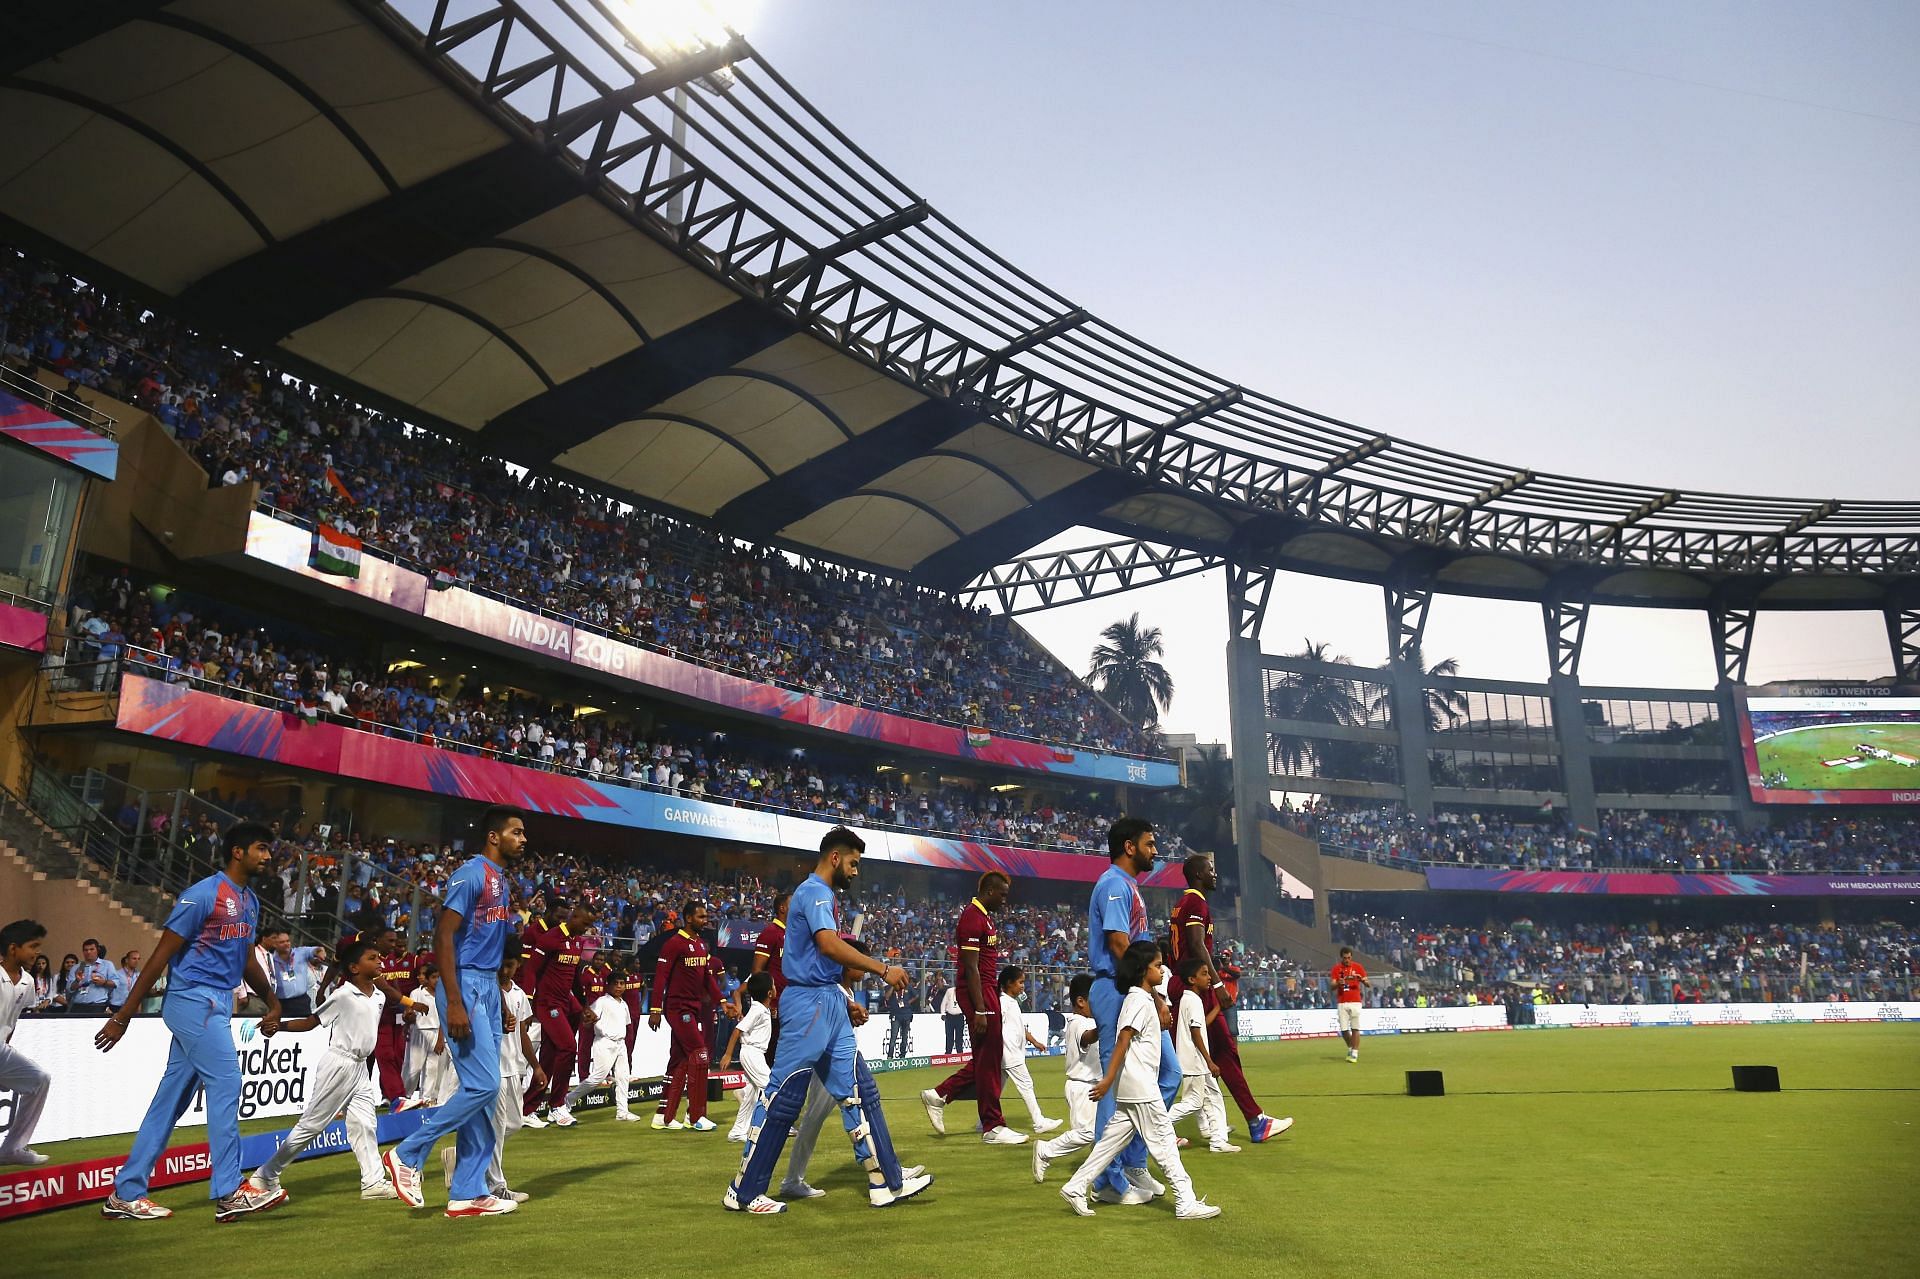 ICC World Twenty20 India 2016: Semi-Final: West Indies v India